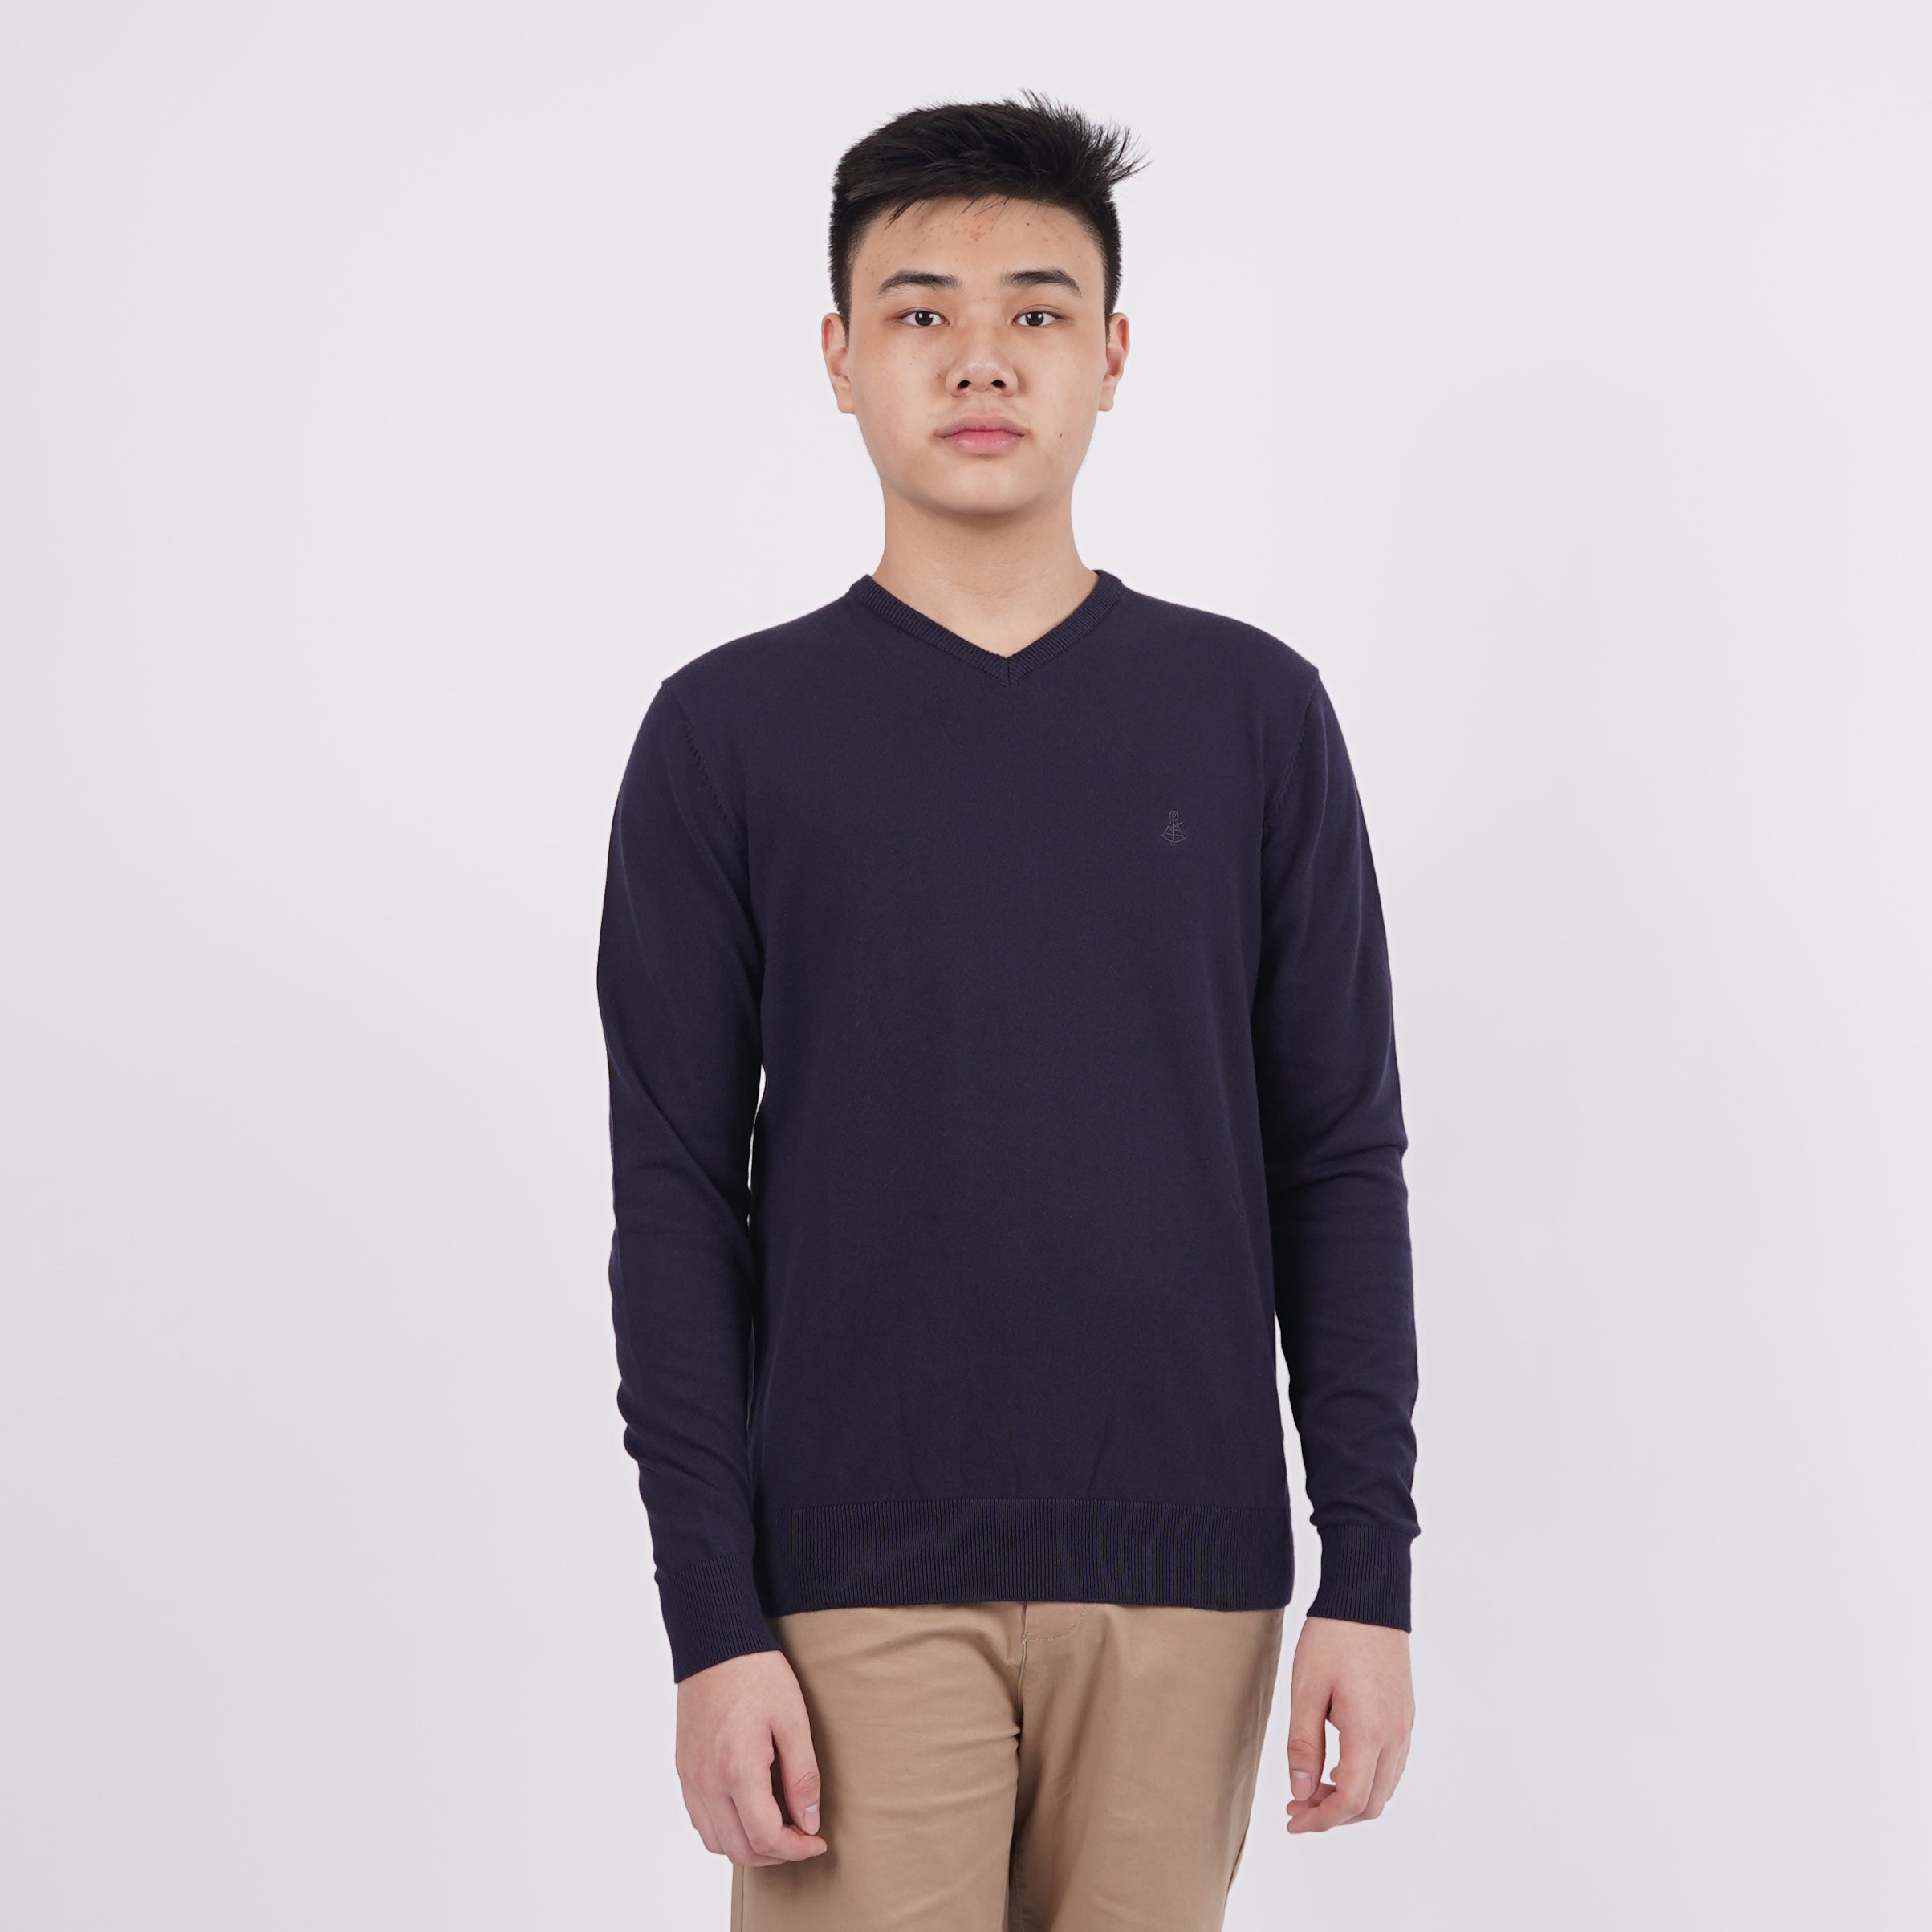 Sweatshirt Pria Kerah V-Neck Tersedia 3 Pilihan Warna [CG-EXPL 01]